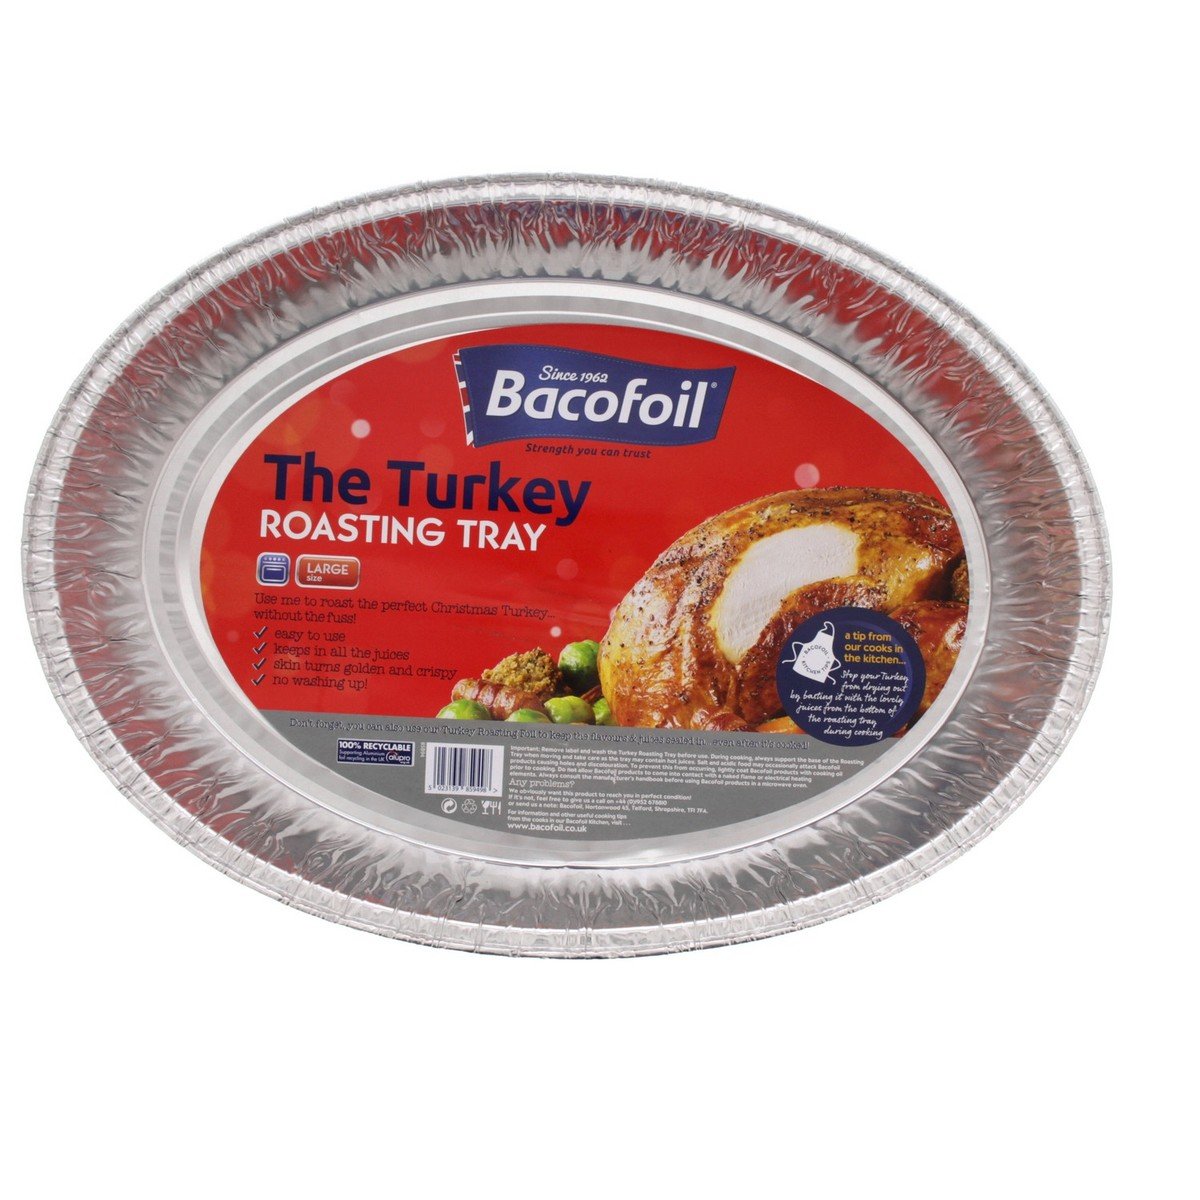 Bacofoil The Turkey Roasting Tray Large 1pc